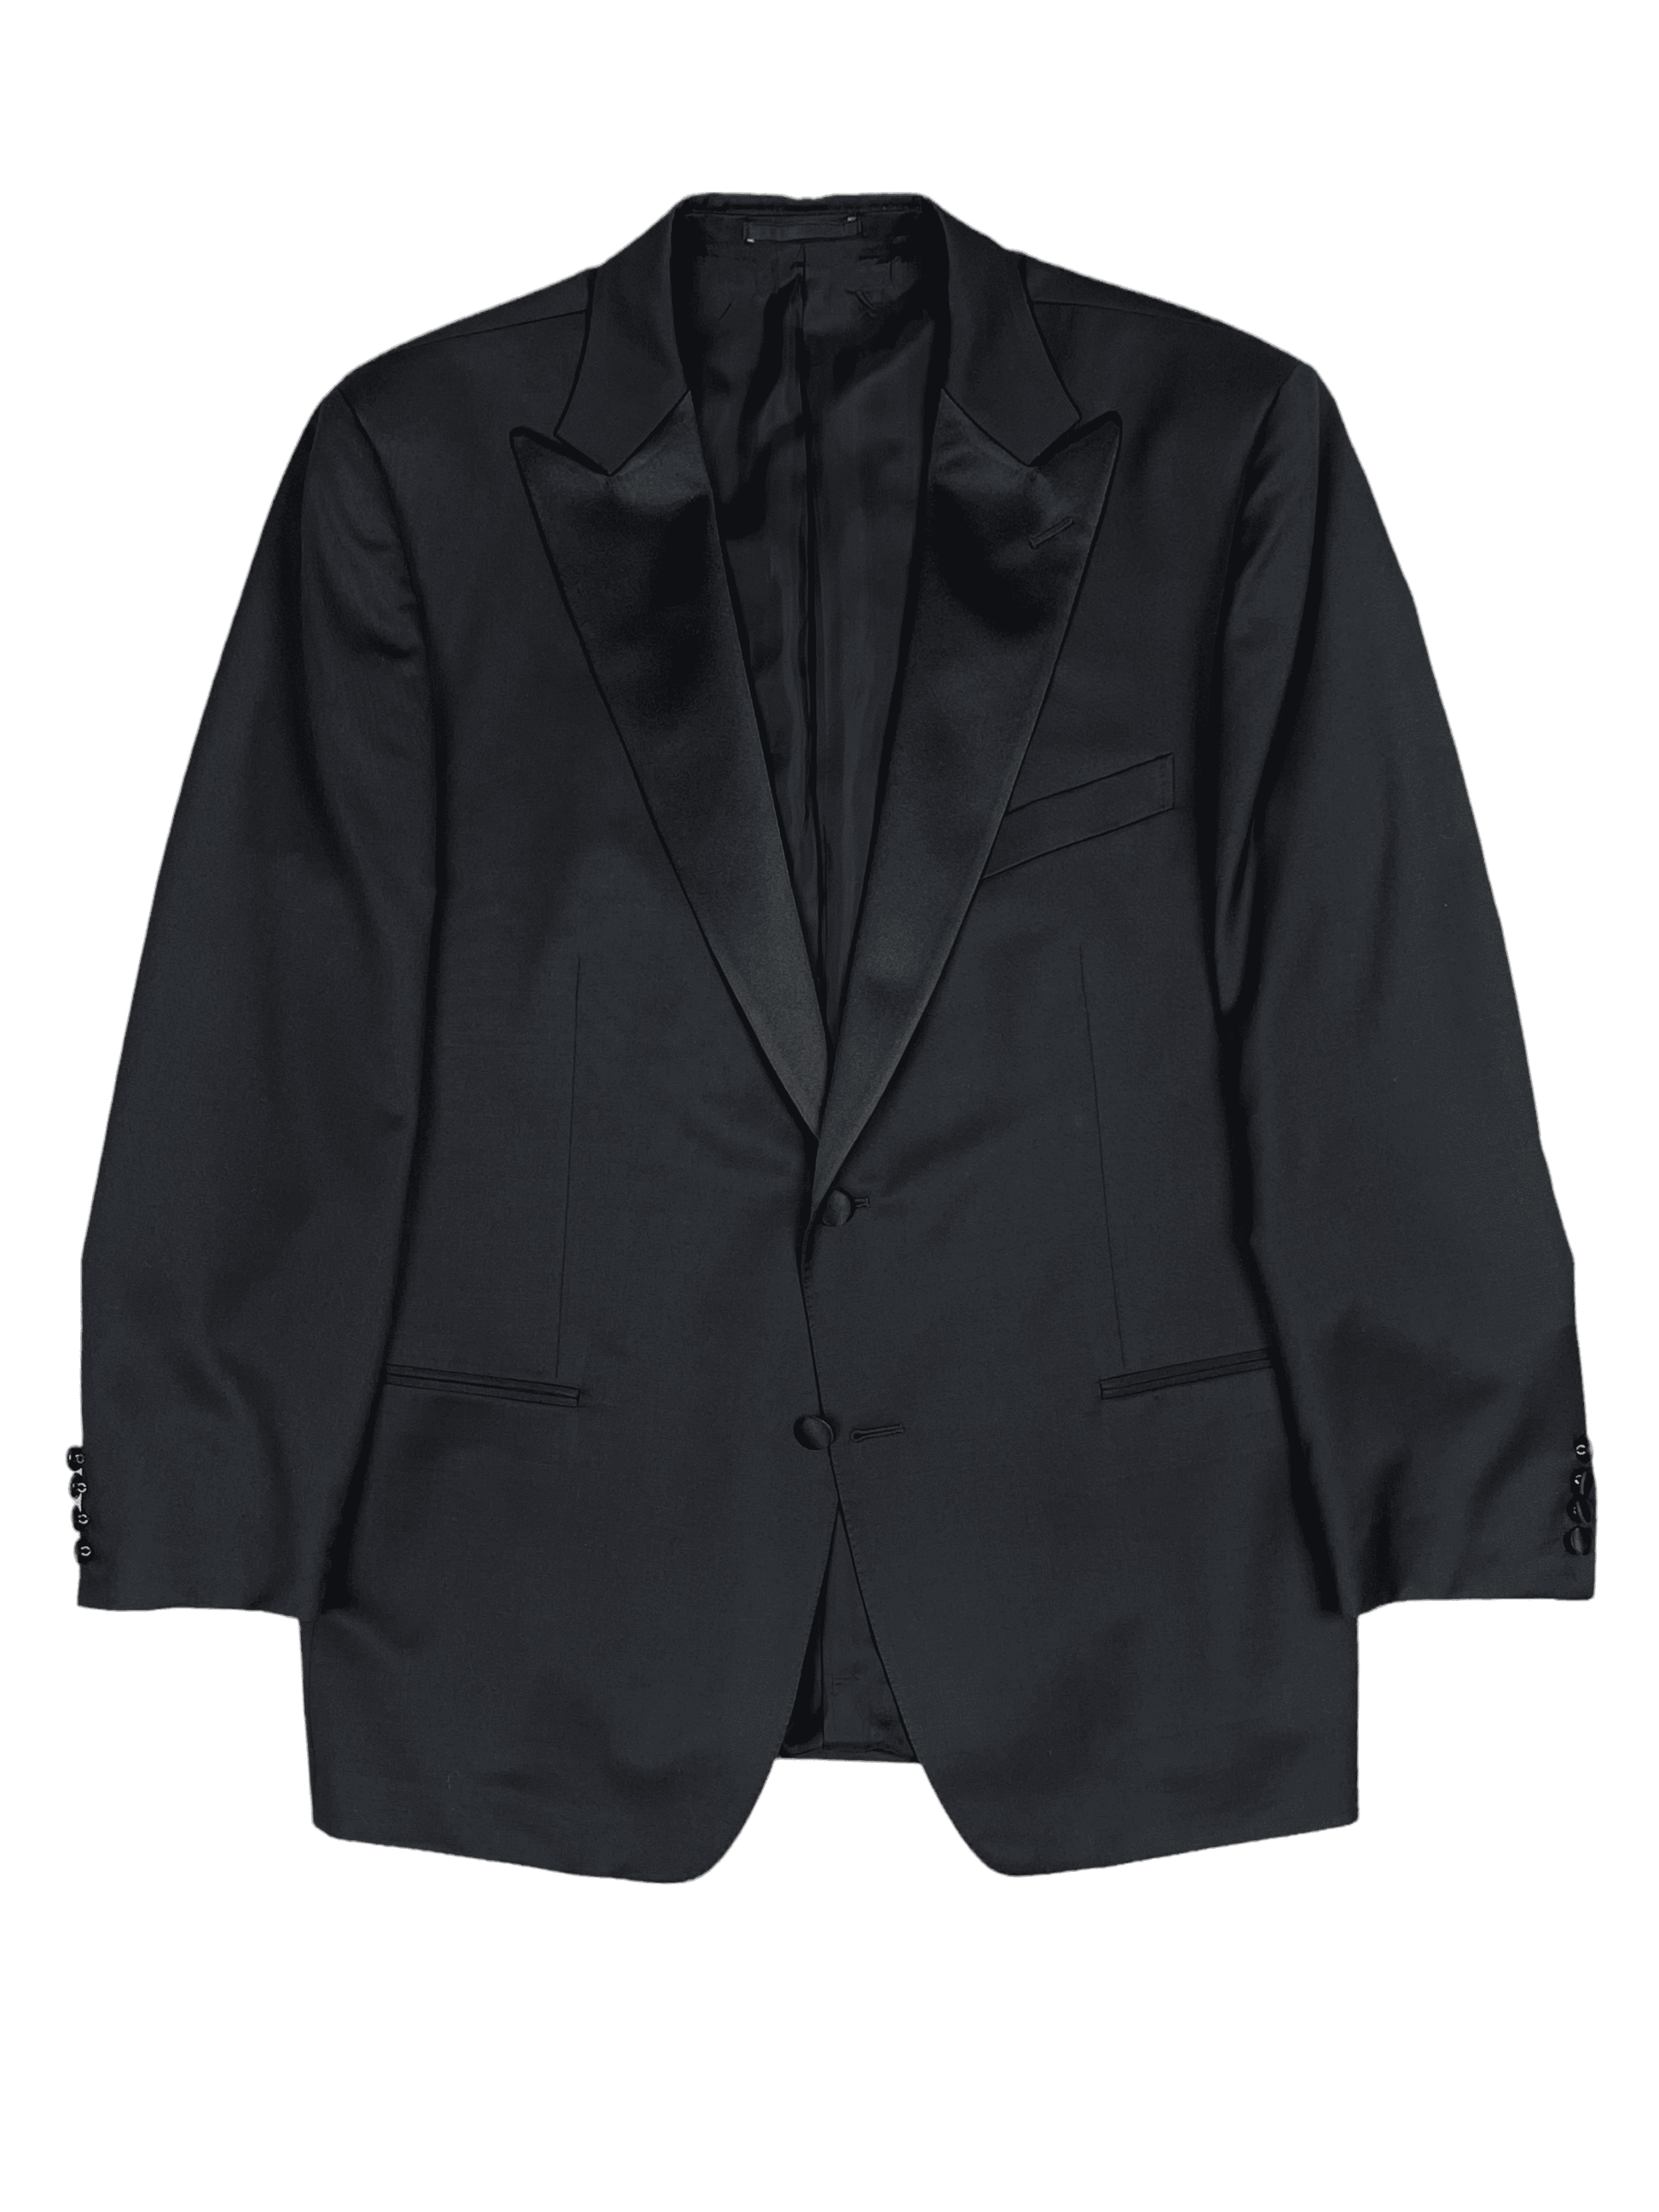 Z Zegna Black Wool Tuxedo 46R – Genuine Design Luxury Consignment